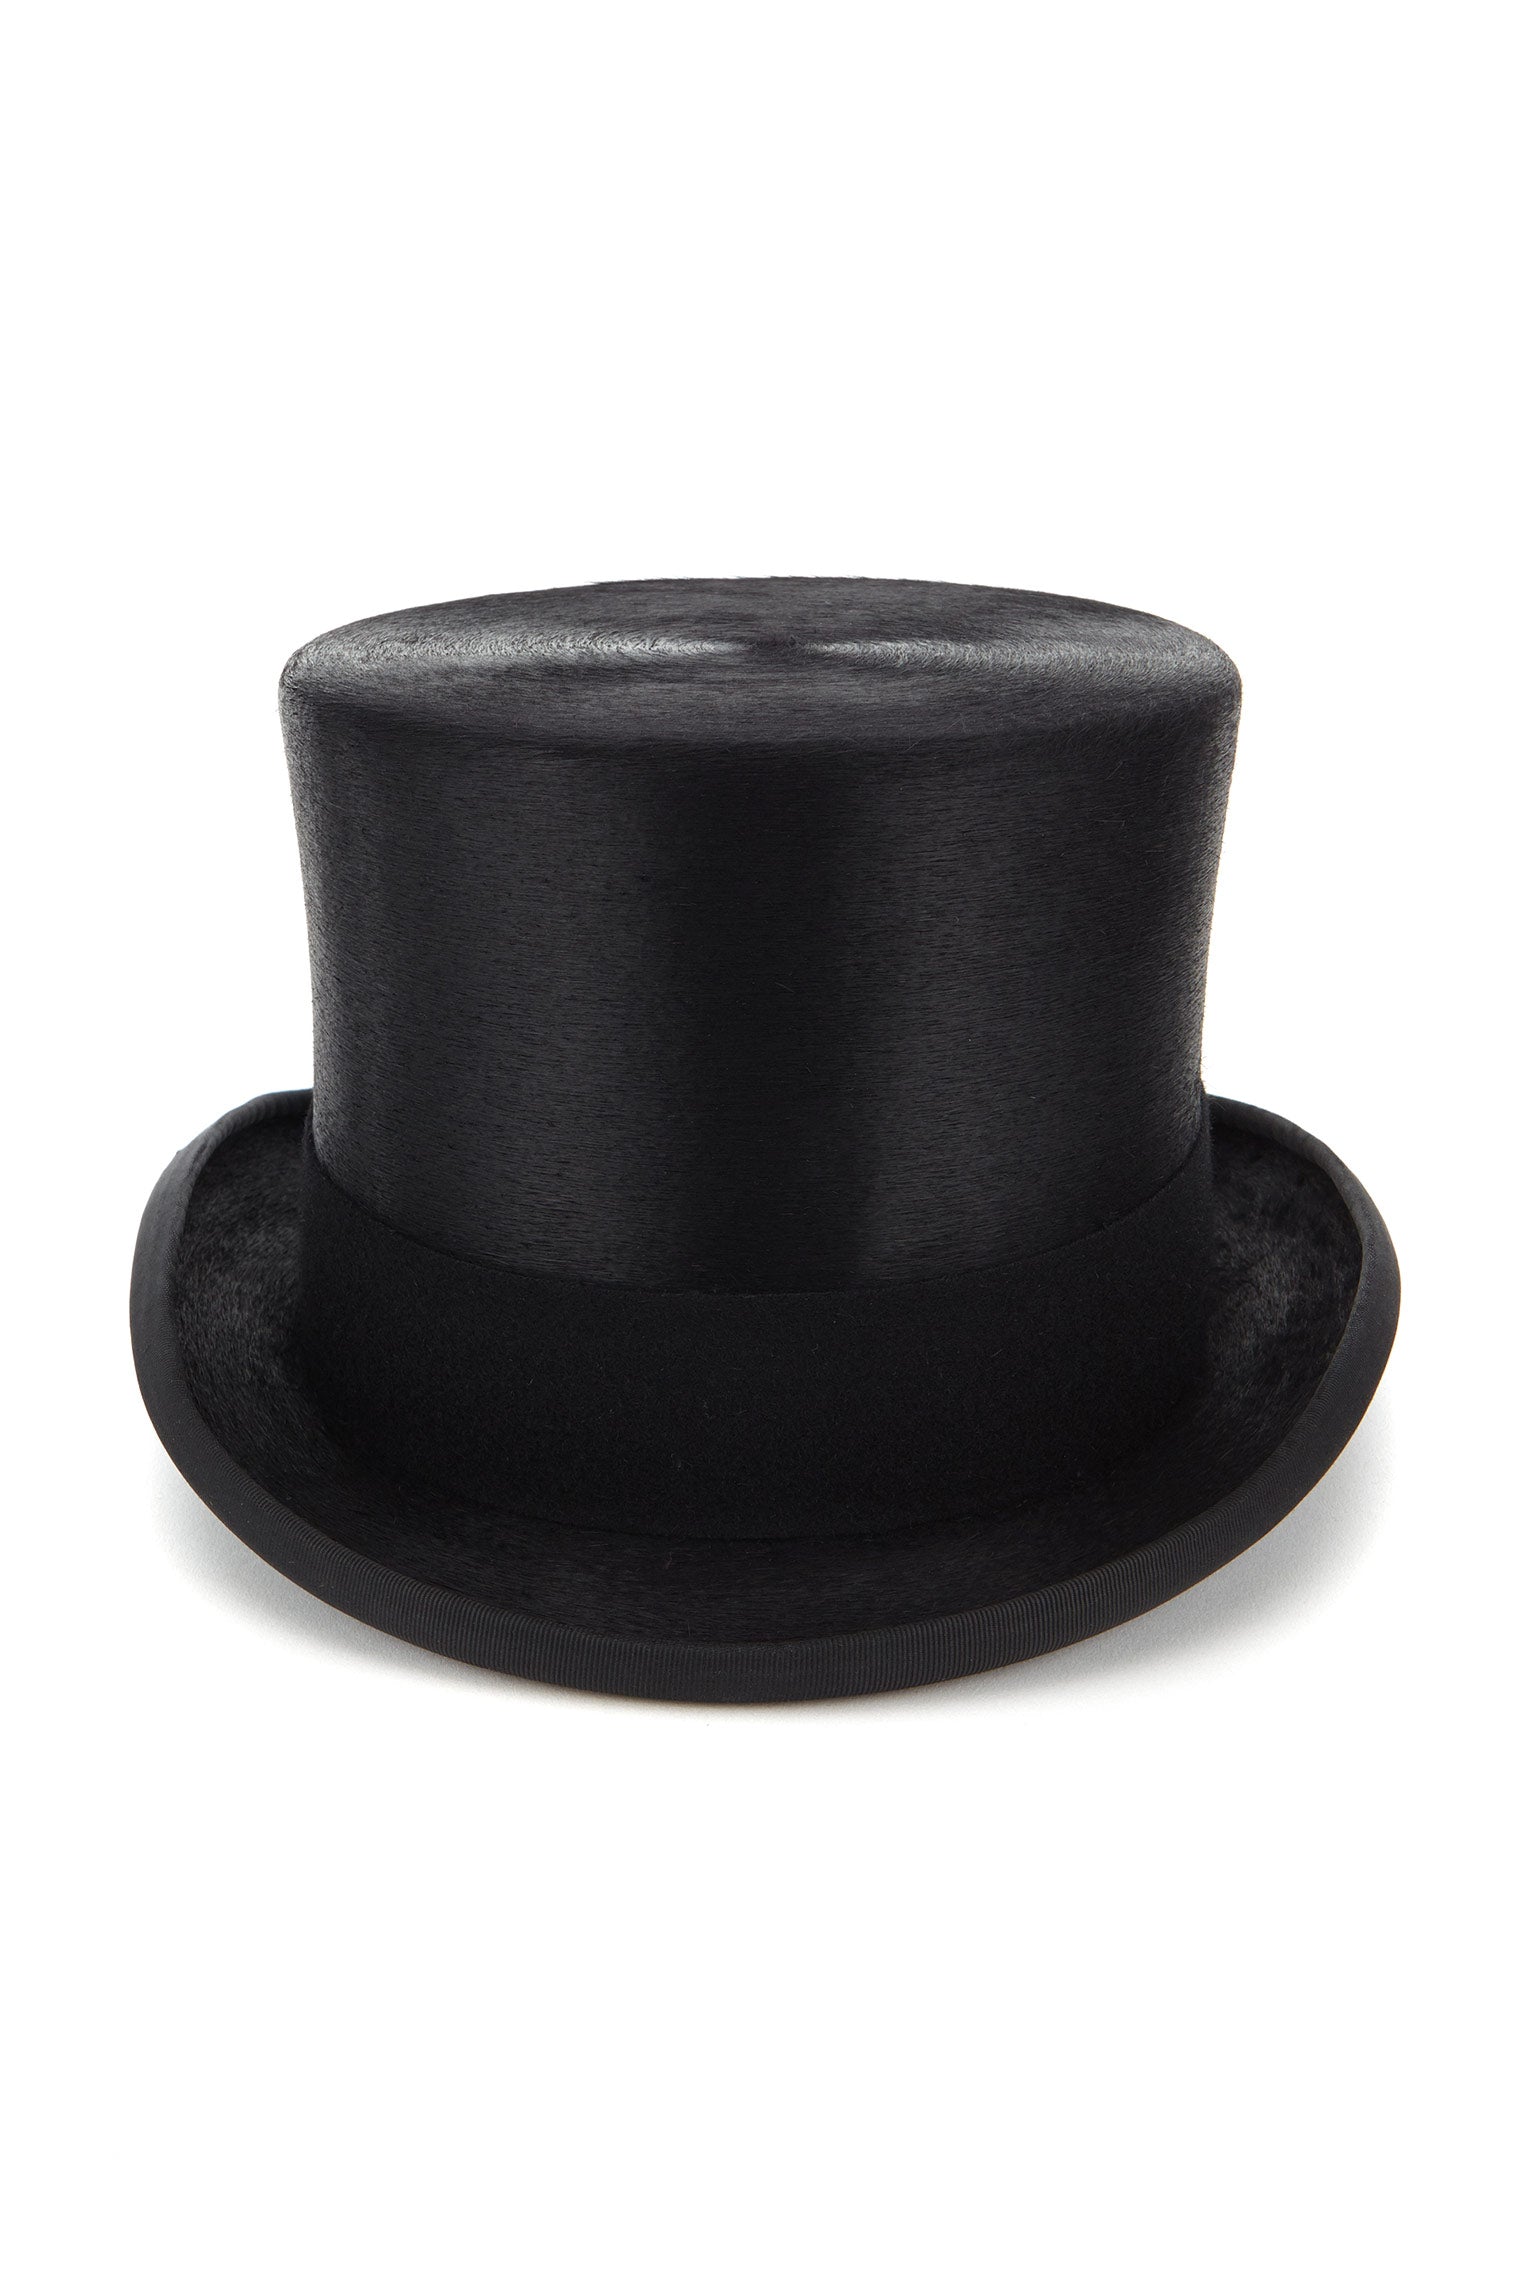 Westminster Top Hat - Men's Hats - Lock & Co. Hatters London UK